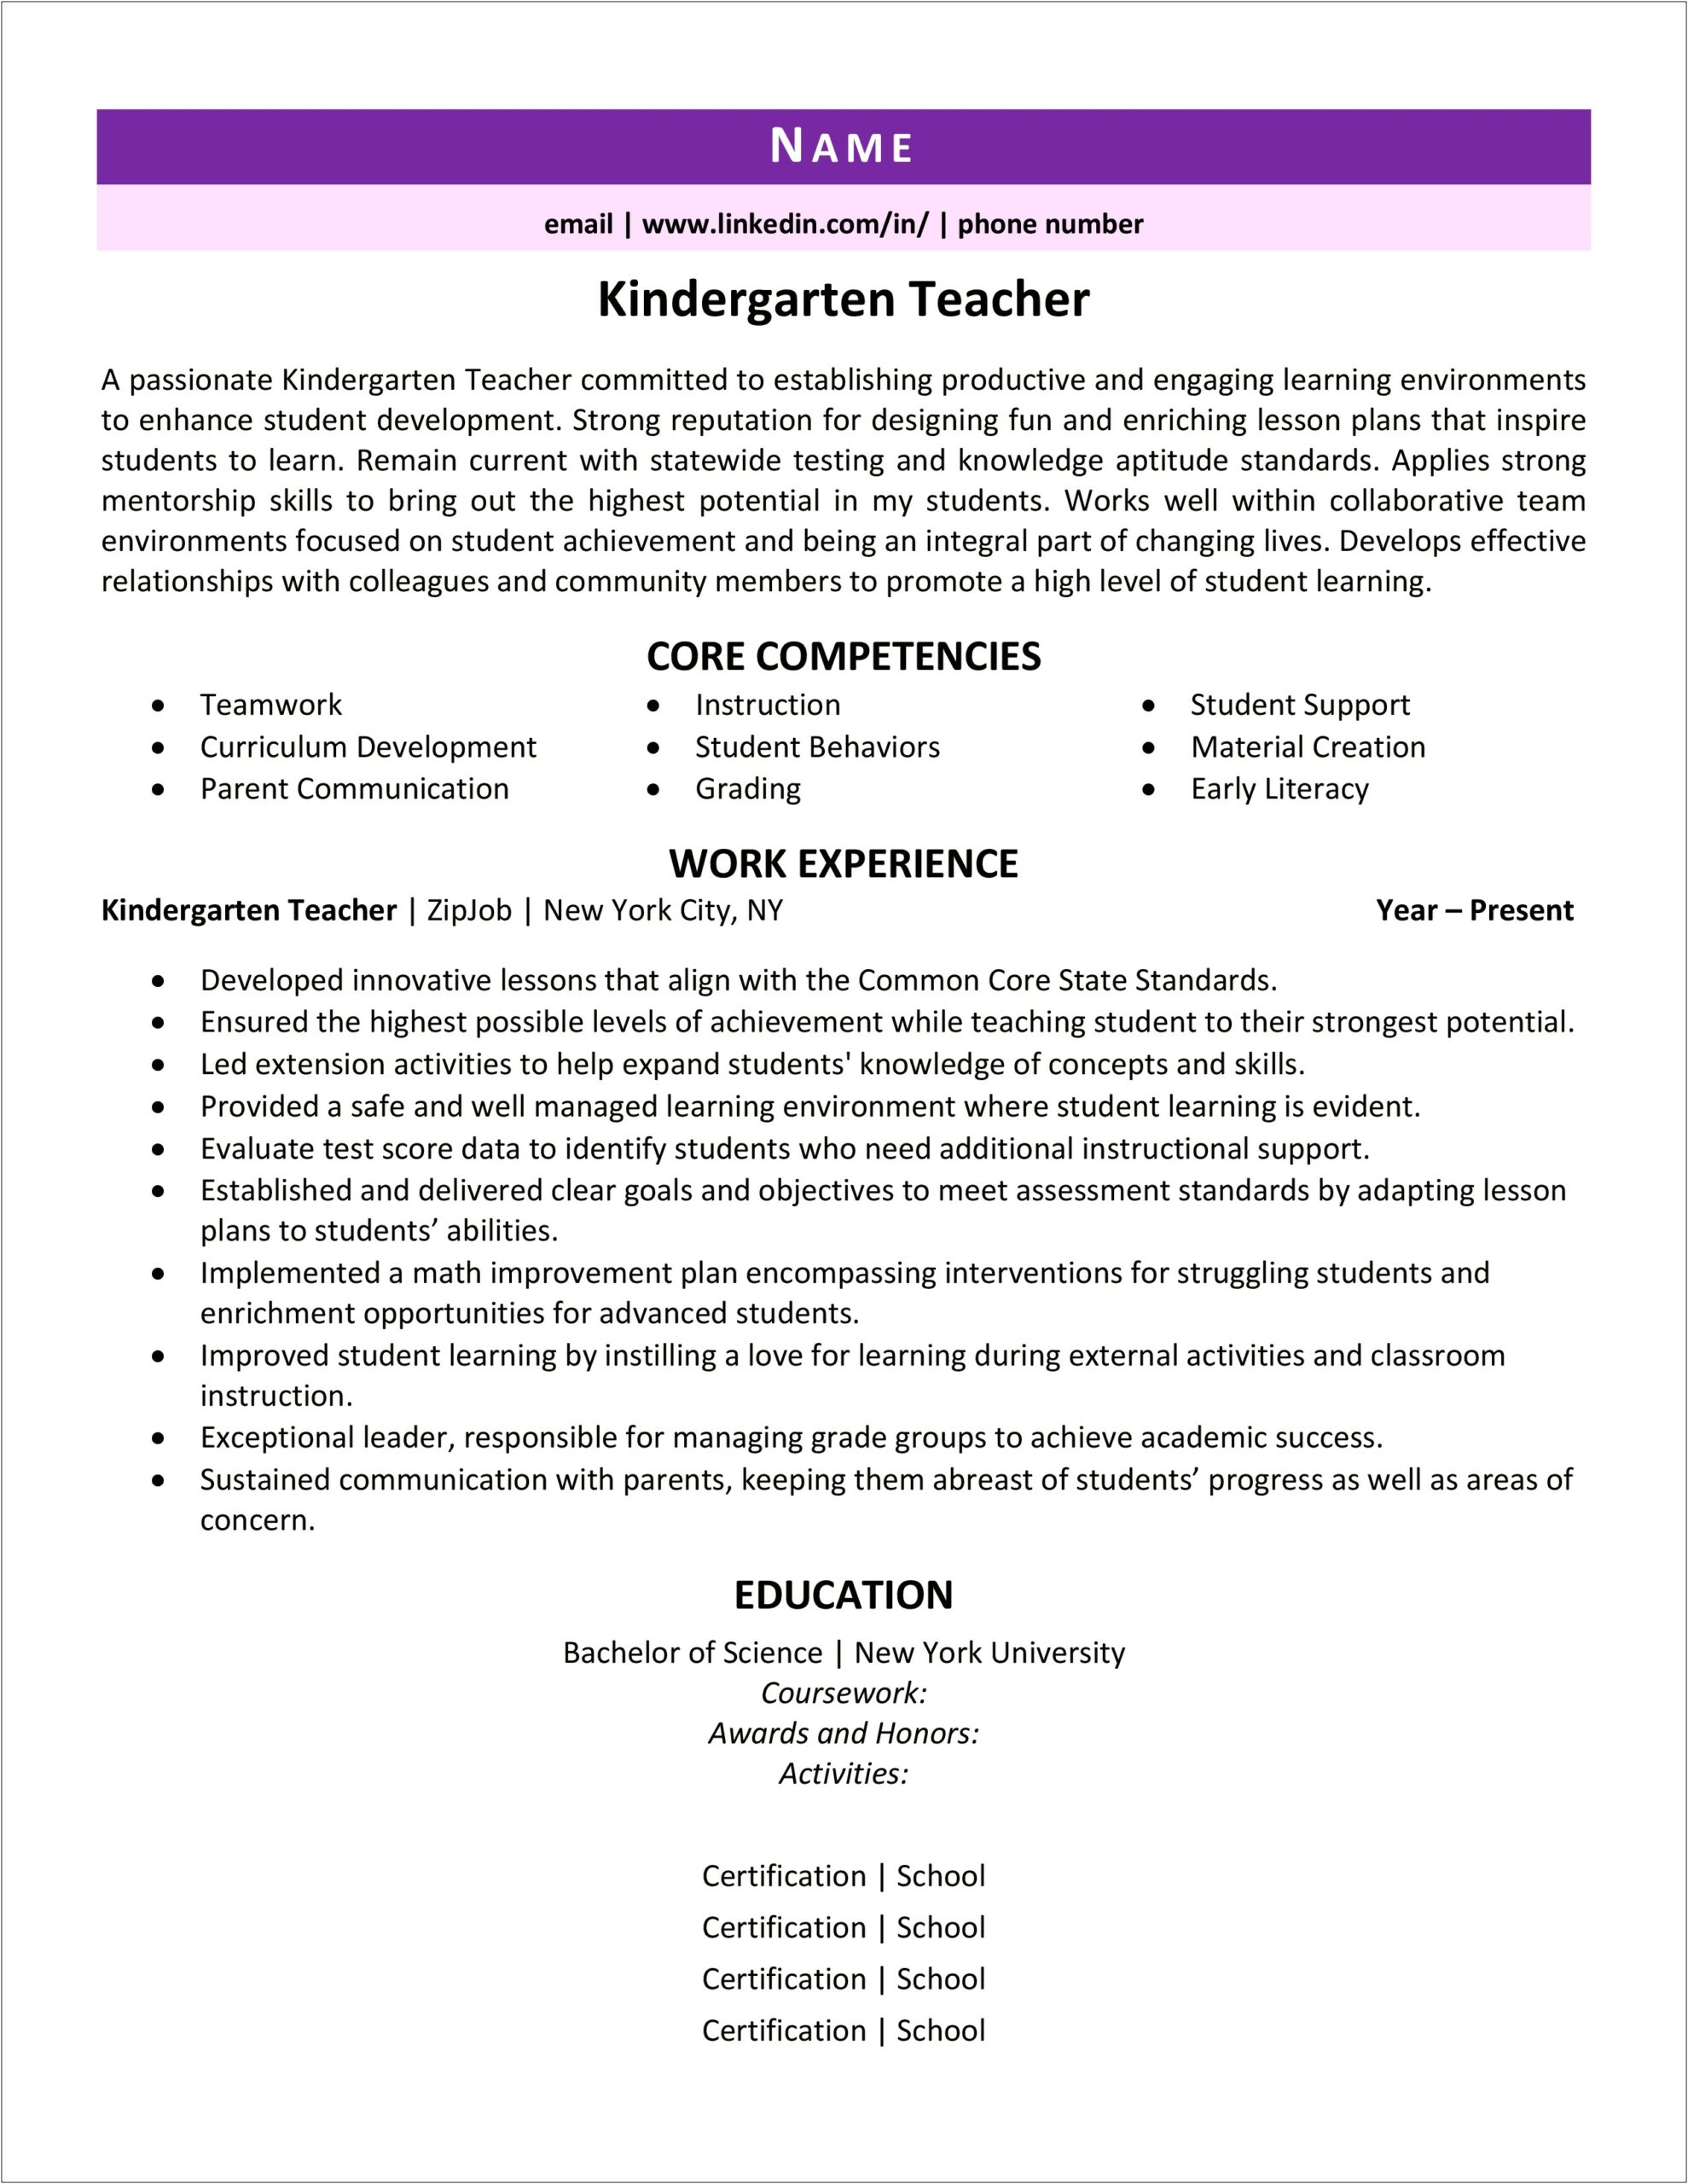 Kindergarten Teacher Job Description Resume Sample